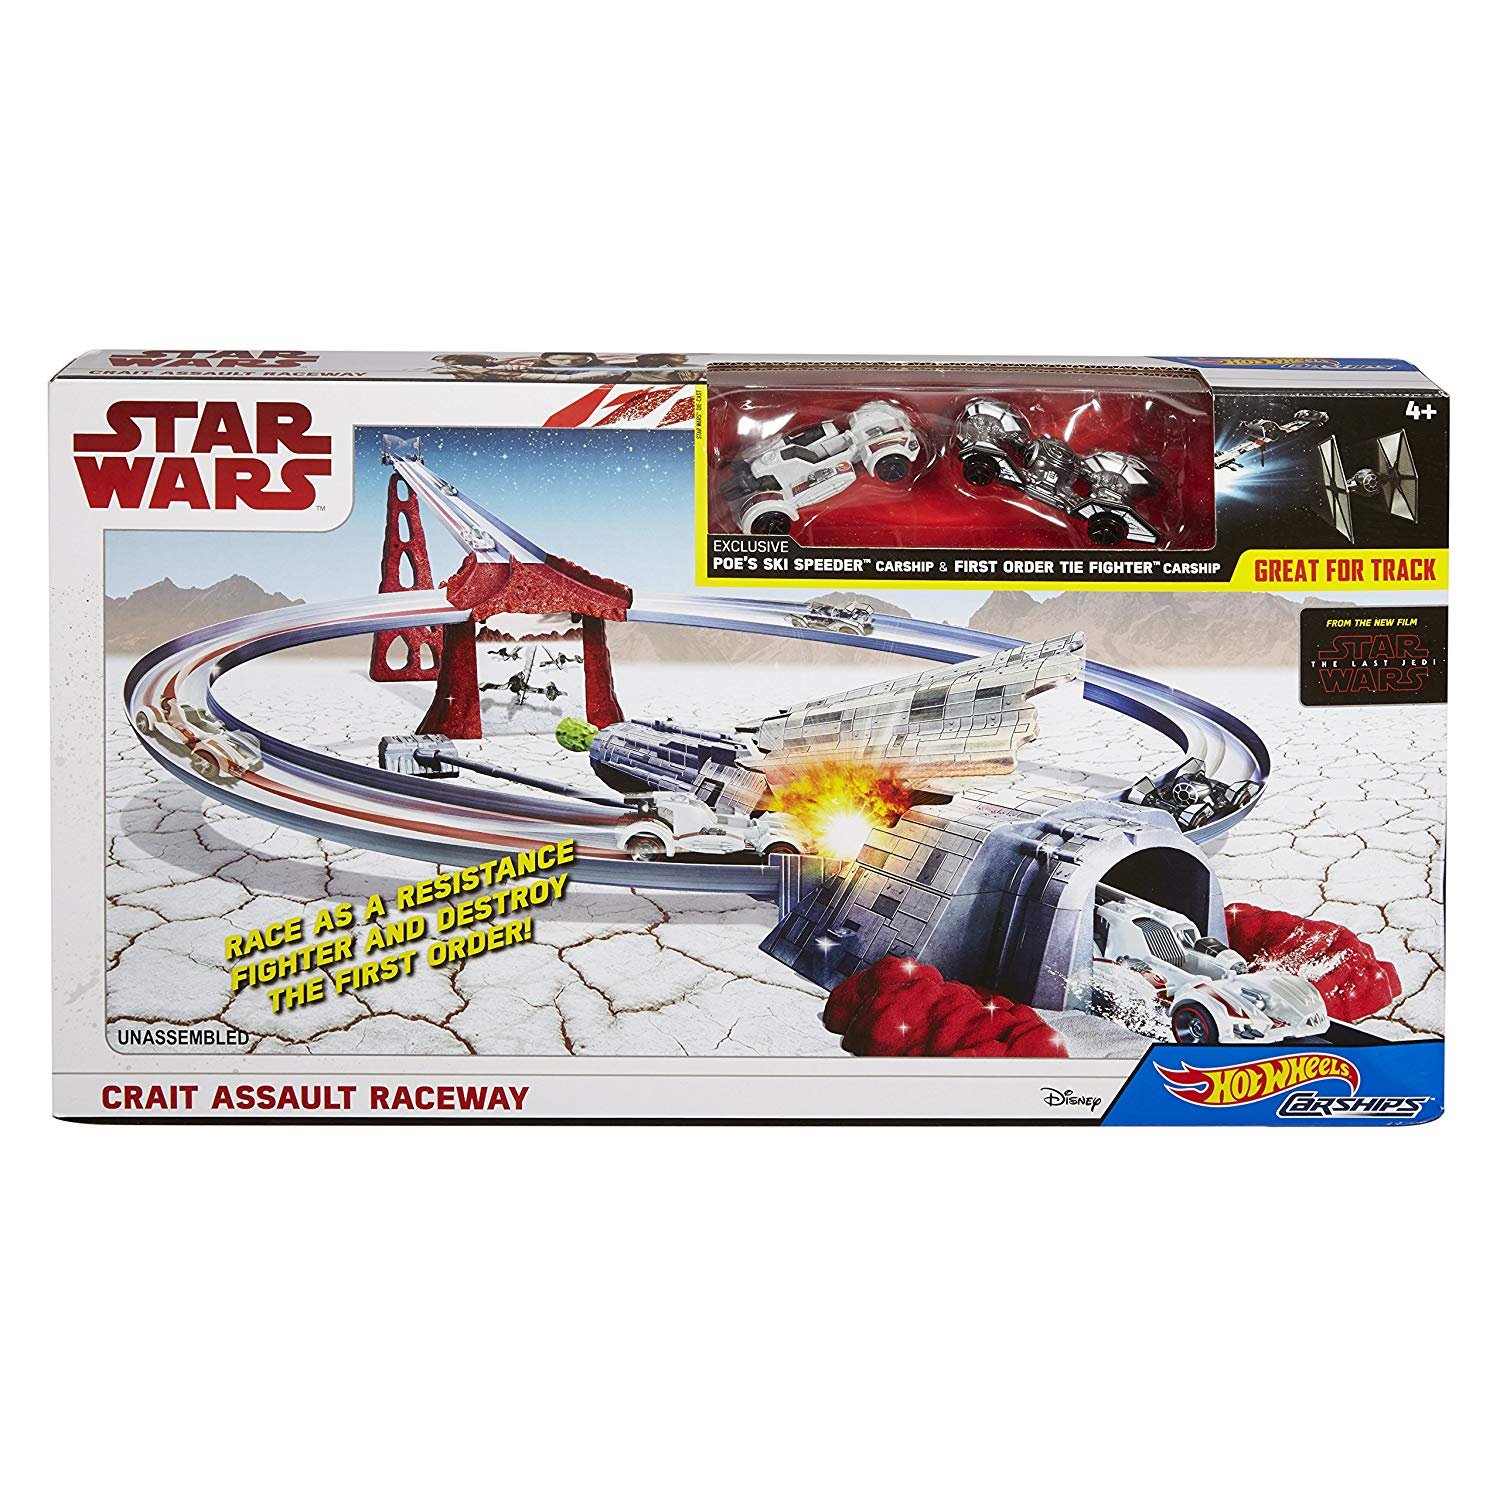 Hot Wheels Star Wars Crait Assault Raceway Track Set - image 3 of 3